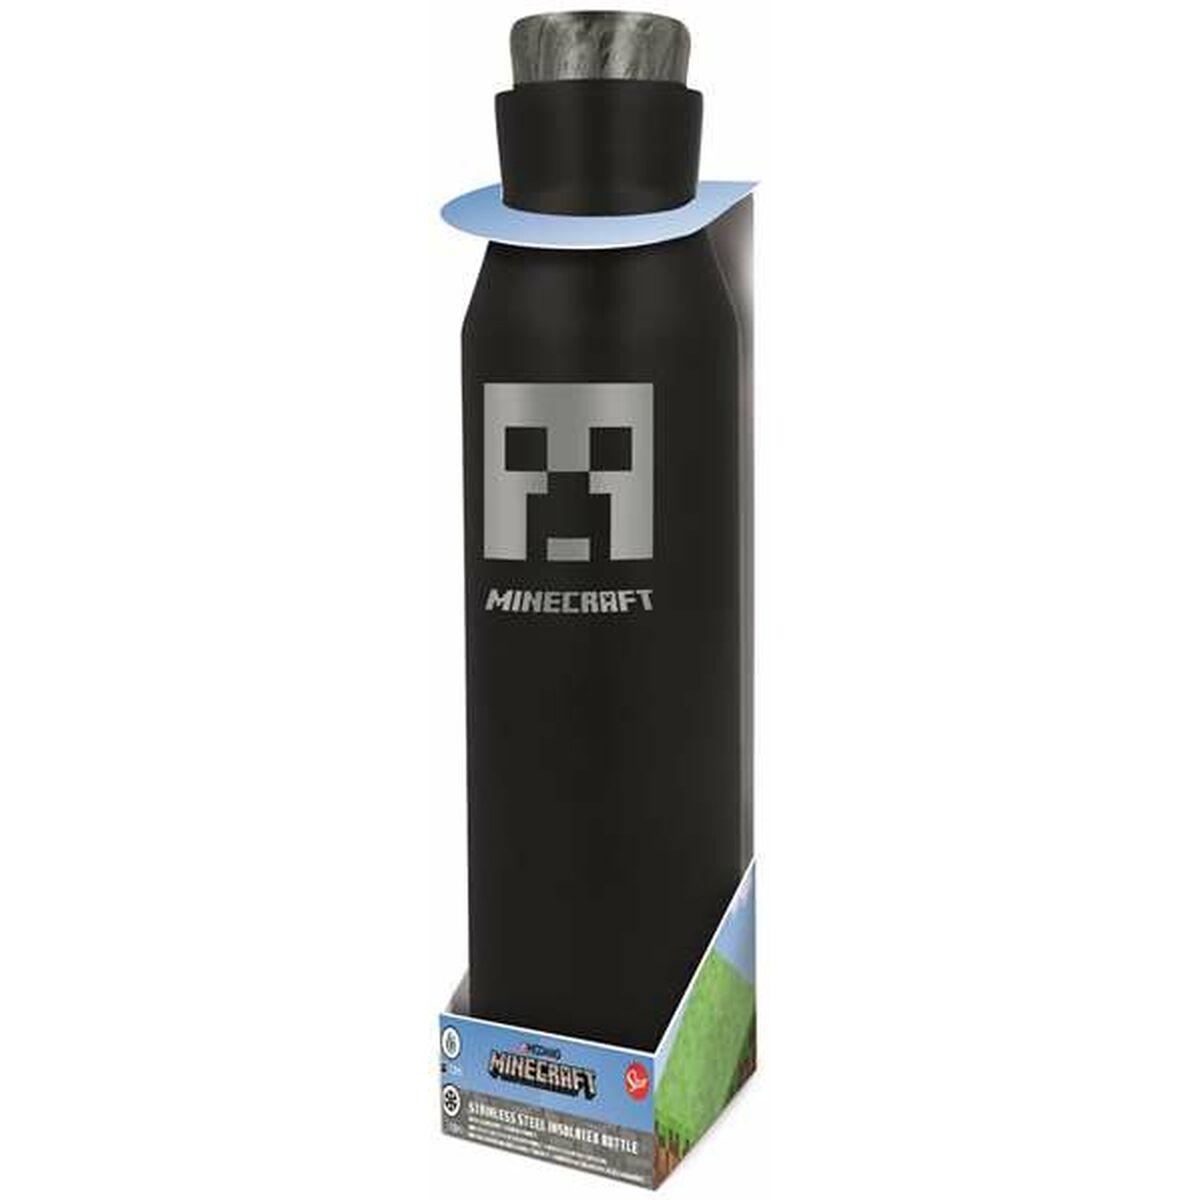 Se Minecraft Creeper Diablo Vandflaske - 580 ML hos Boligcenter.dk